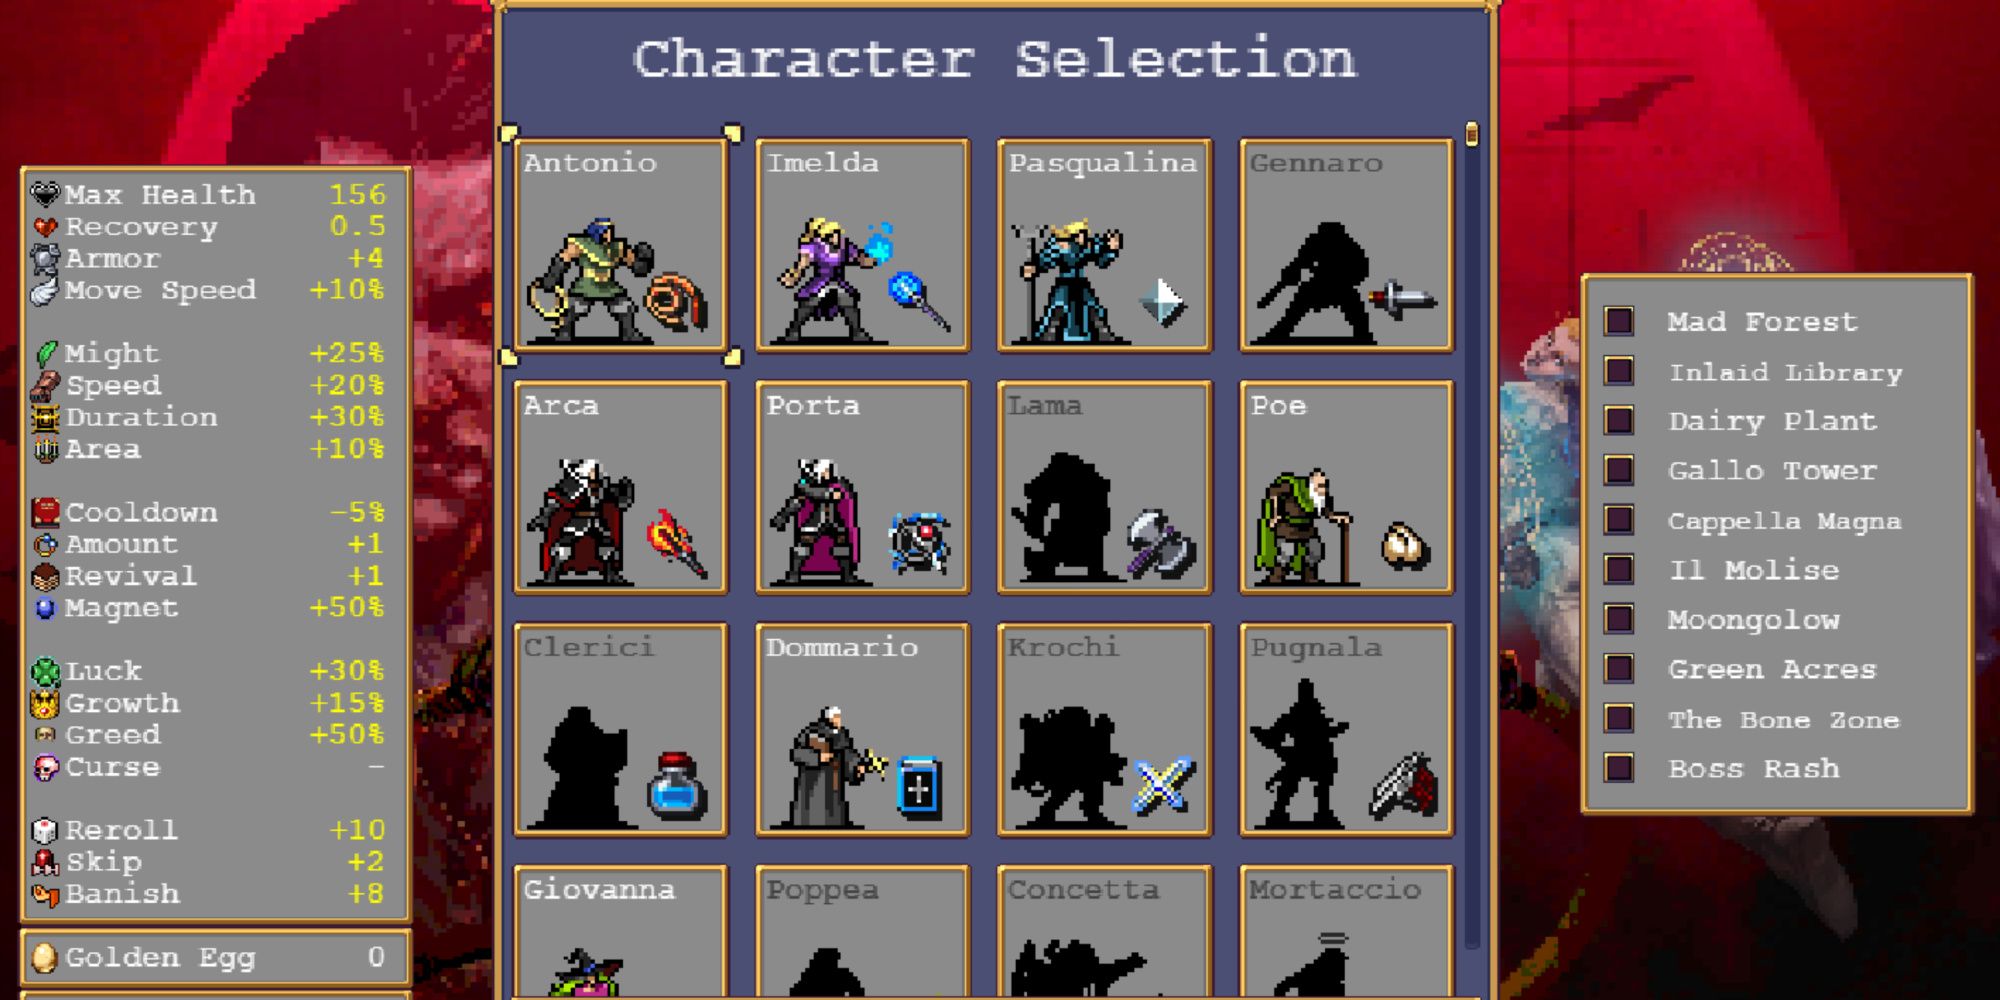 vampire survivors character selection menu from the main menu options